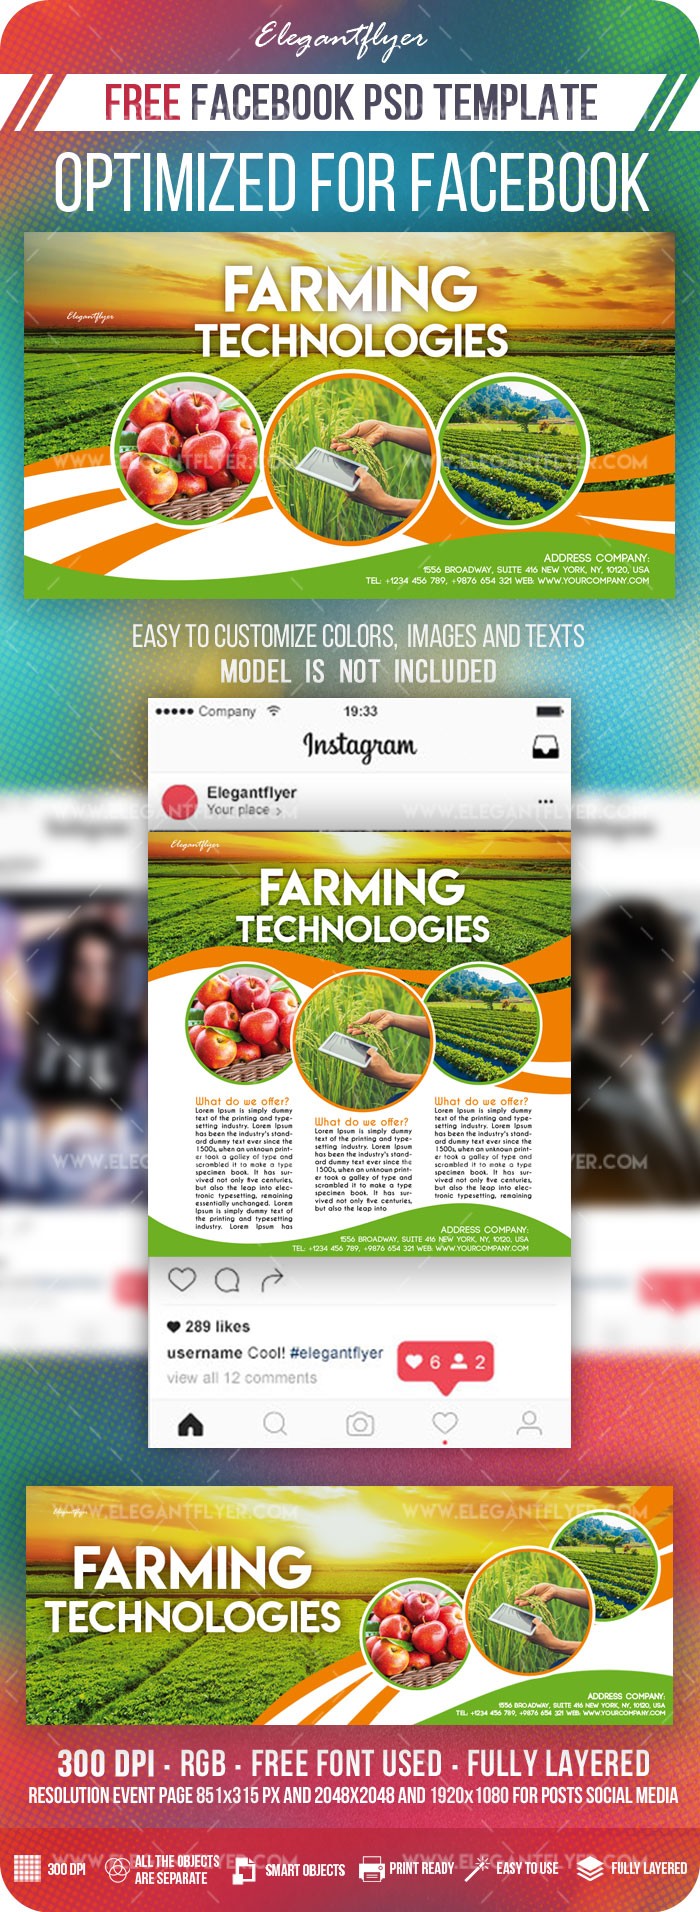 Farming Technologies Facebook by ElegantFlyer